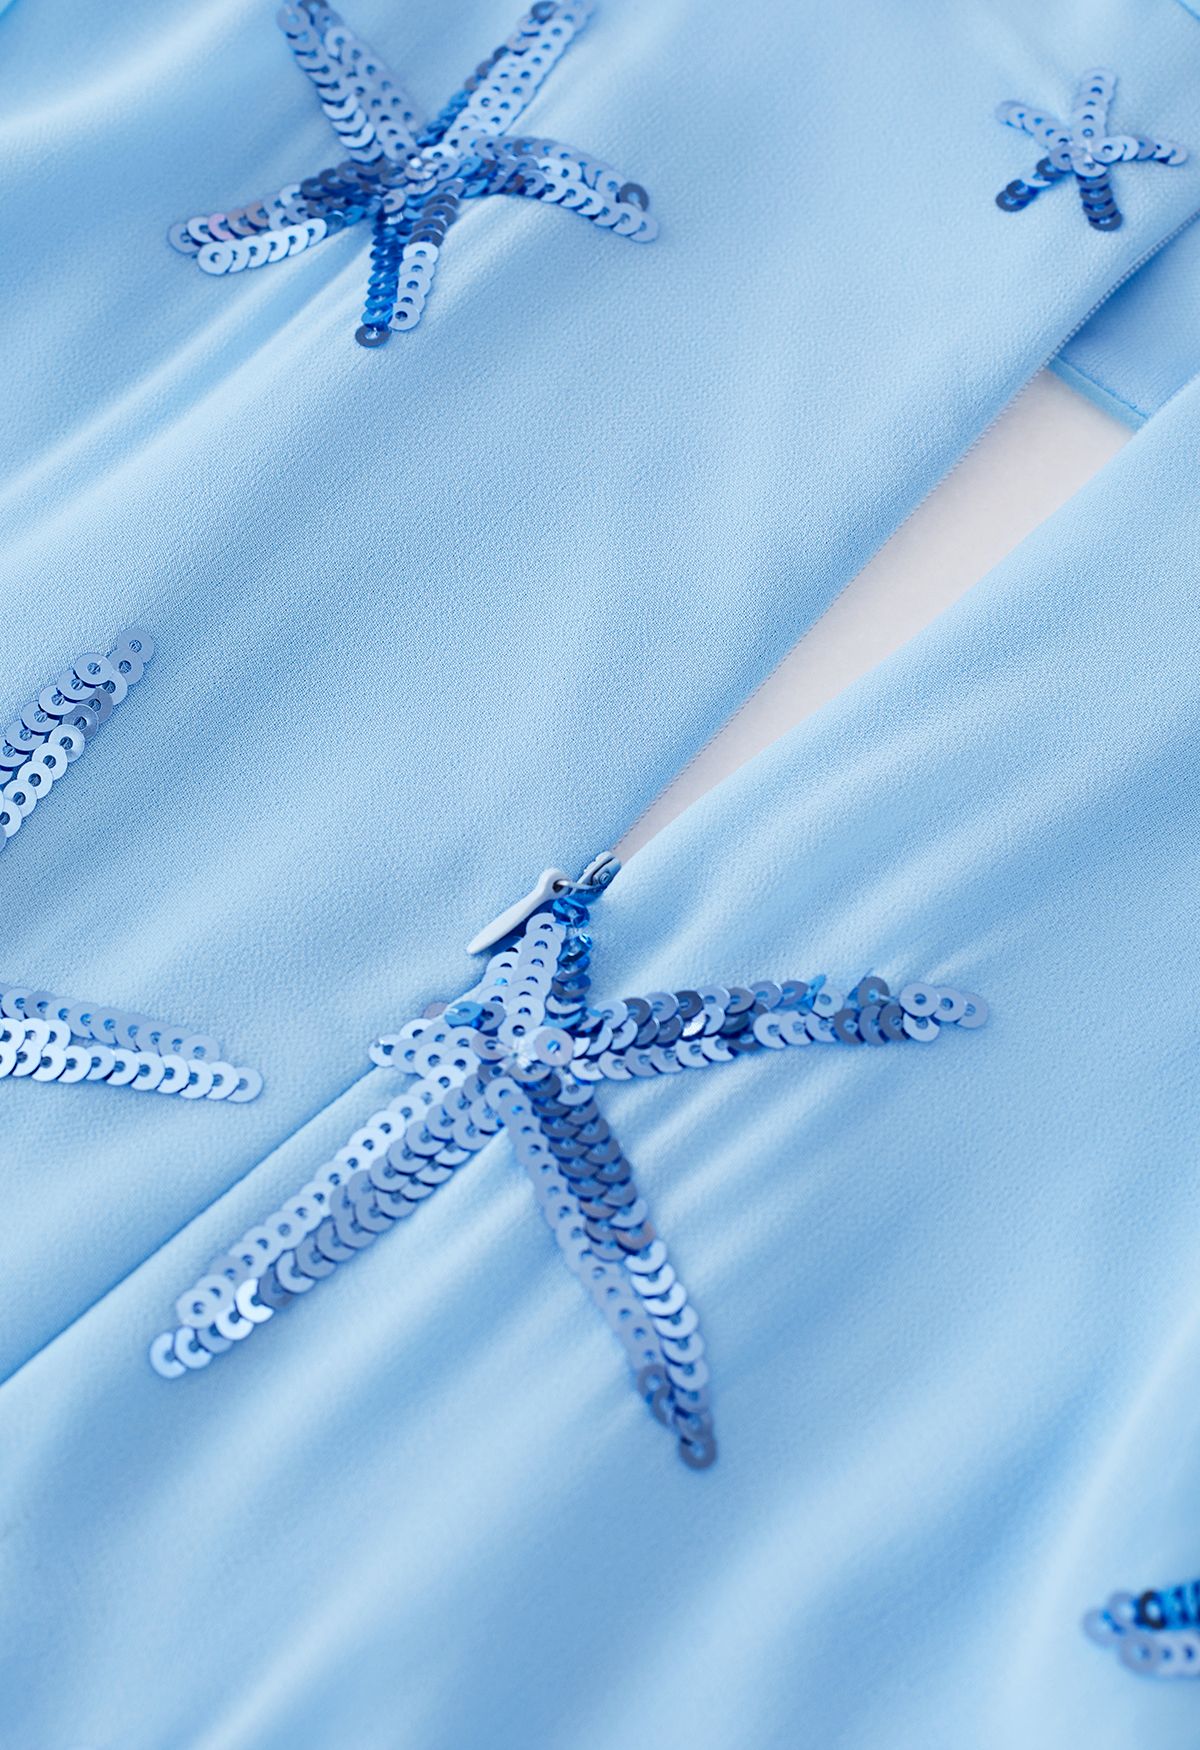 Stars Sequin-Embellished Front Slip Maxi Dress in Blue